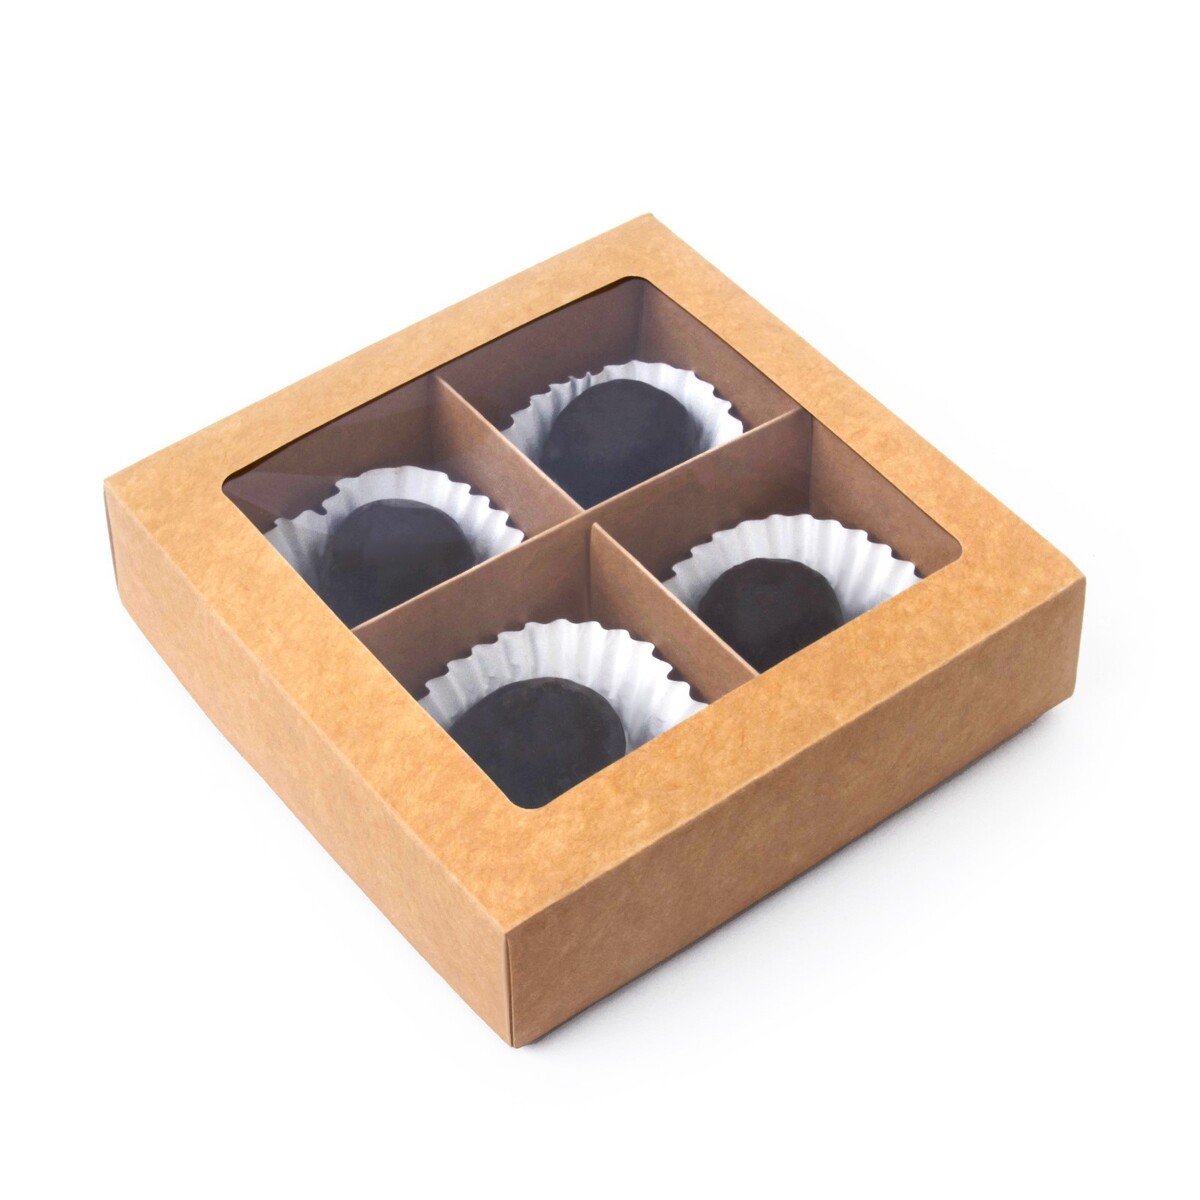 Коробка складная под 4 конфеты с окном, крафт, 12.6 х 12.6 х 3.5 см коробка складная под 4 конфеты белая 12 6 х 12 6 х 3 5 см